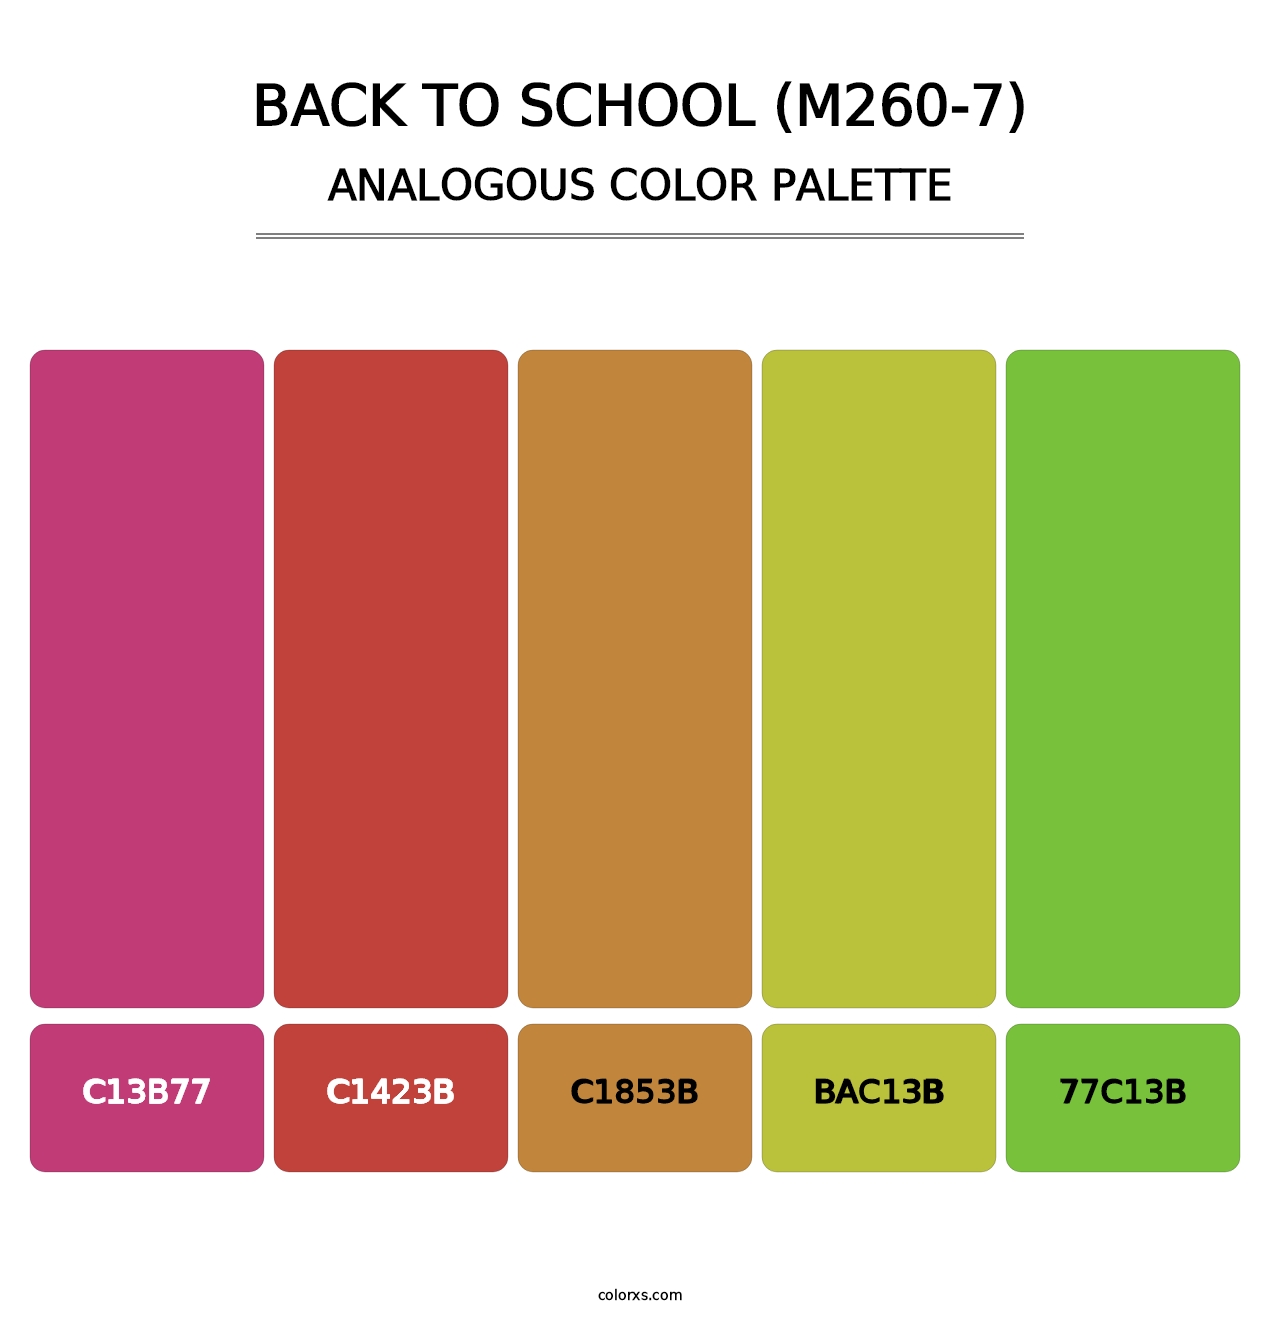 Back To School (M260-7) - Analogous Color Palette